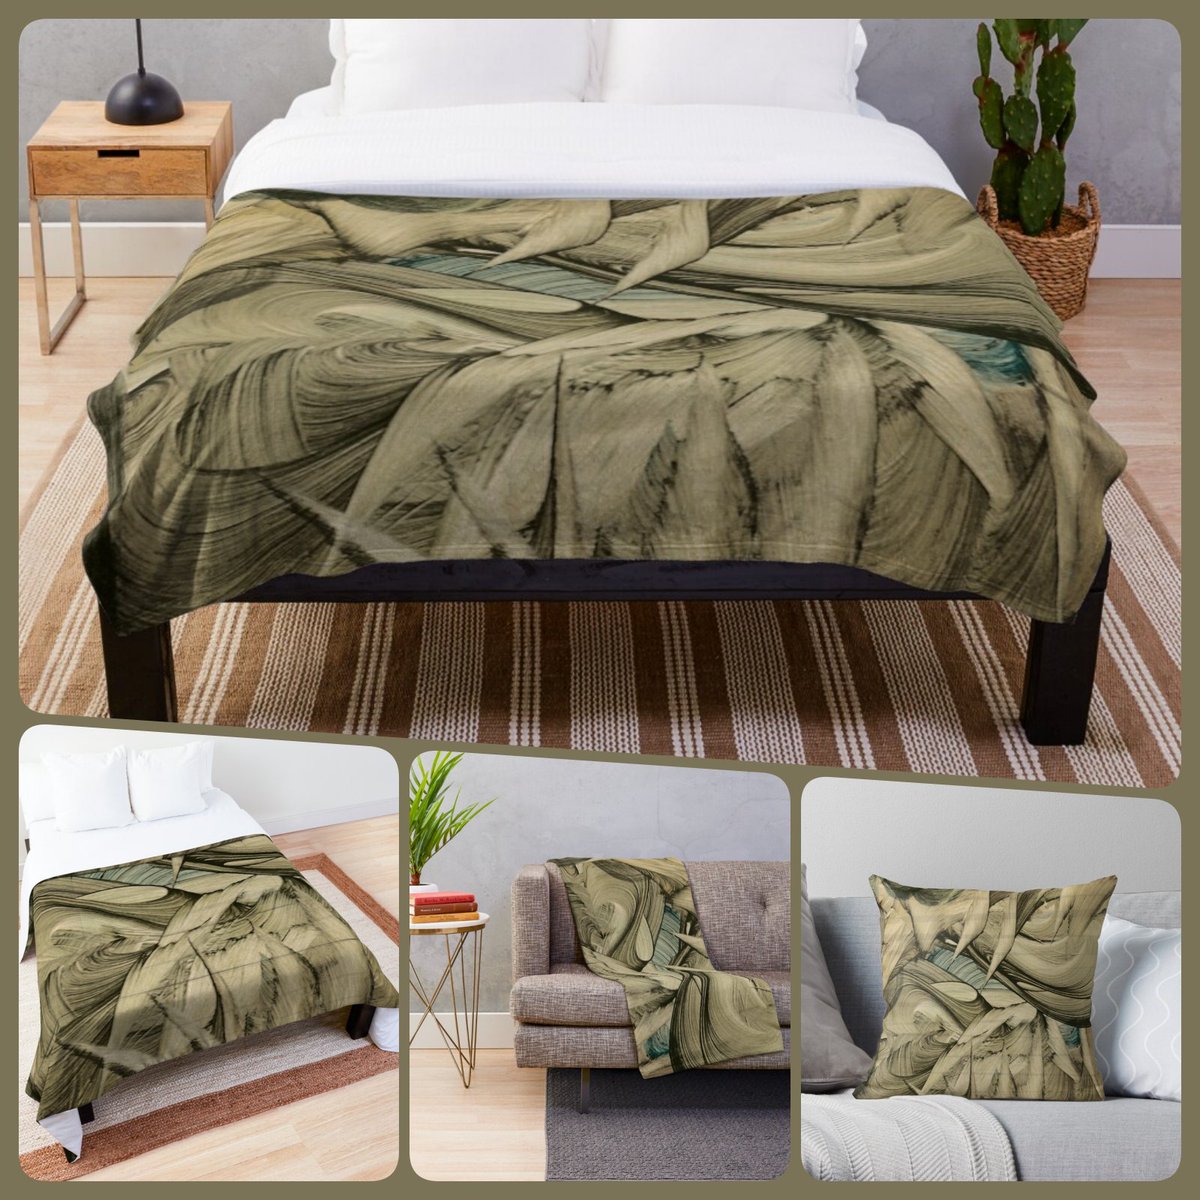 Ruda Comforter by Art Falaxy~Be Artful~ #accents #homedecor #art #artfalaxy #acrylicblocks #bathmats #blankets #comforters #duvets #pillows #redbubble #shower #trendy #modern #gifts #FindYourThing #blue #earthtones #brown #beige
redbubble.com/i/comforter/Ru…